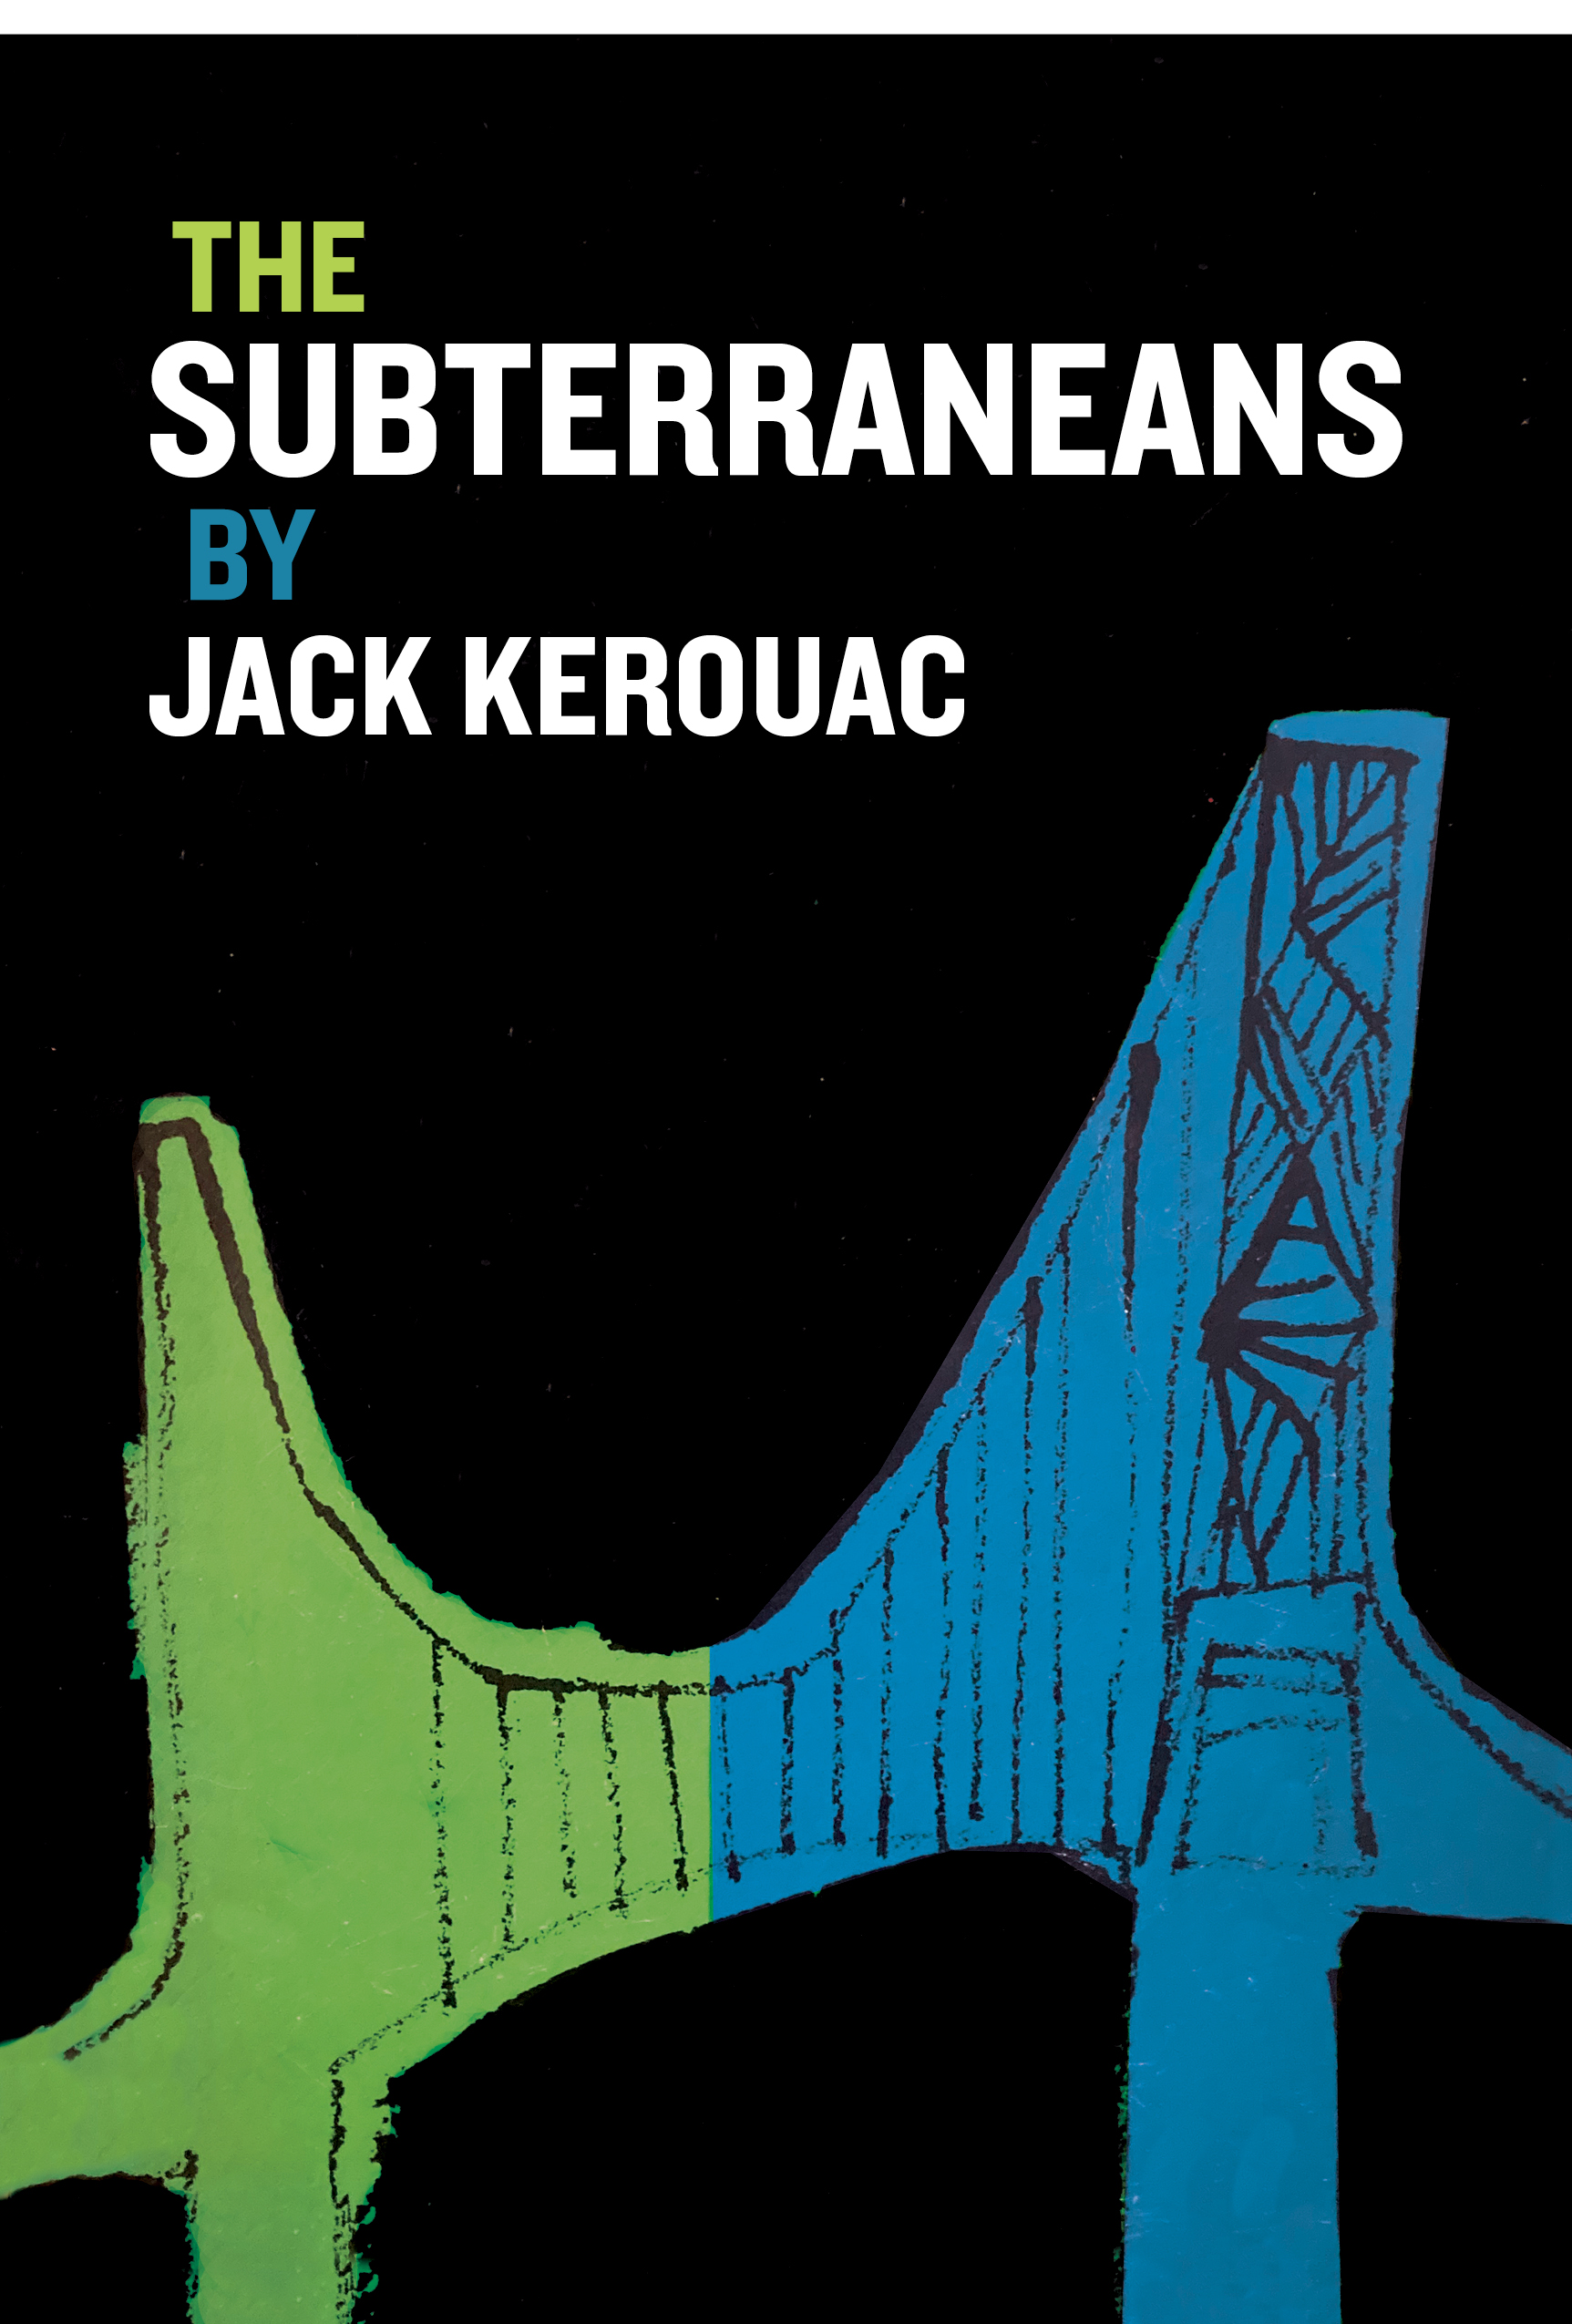 MAGNET PAPERBACK BOOK Cover Reproduction The SUBTERRANEANS 1957 Jack Kerouac 